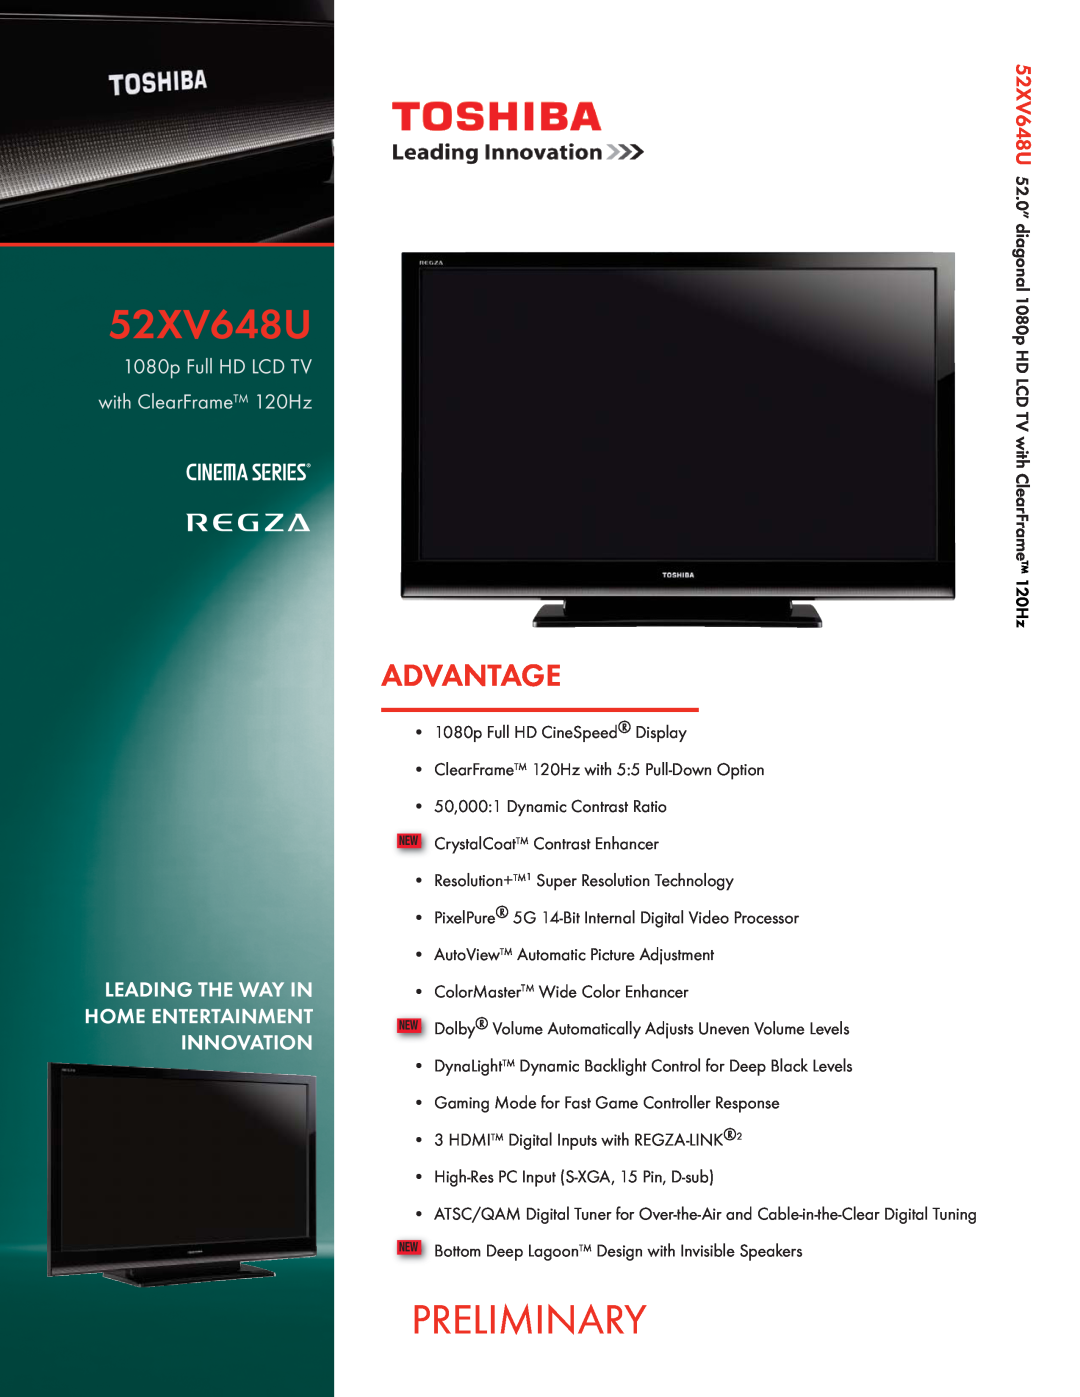 Toshiba 52XV648U manual Preliminary, Advantage, 1080p Full HD LCD TV with ClearFrame 120Hz 